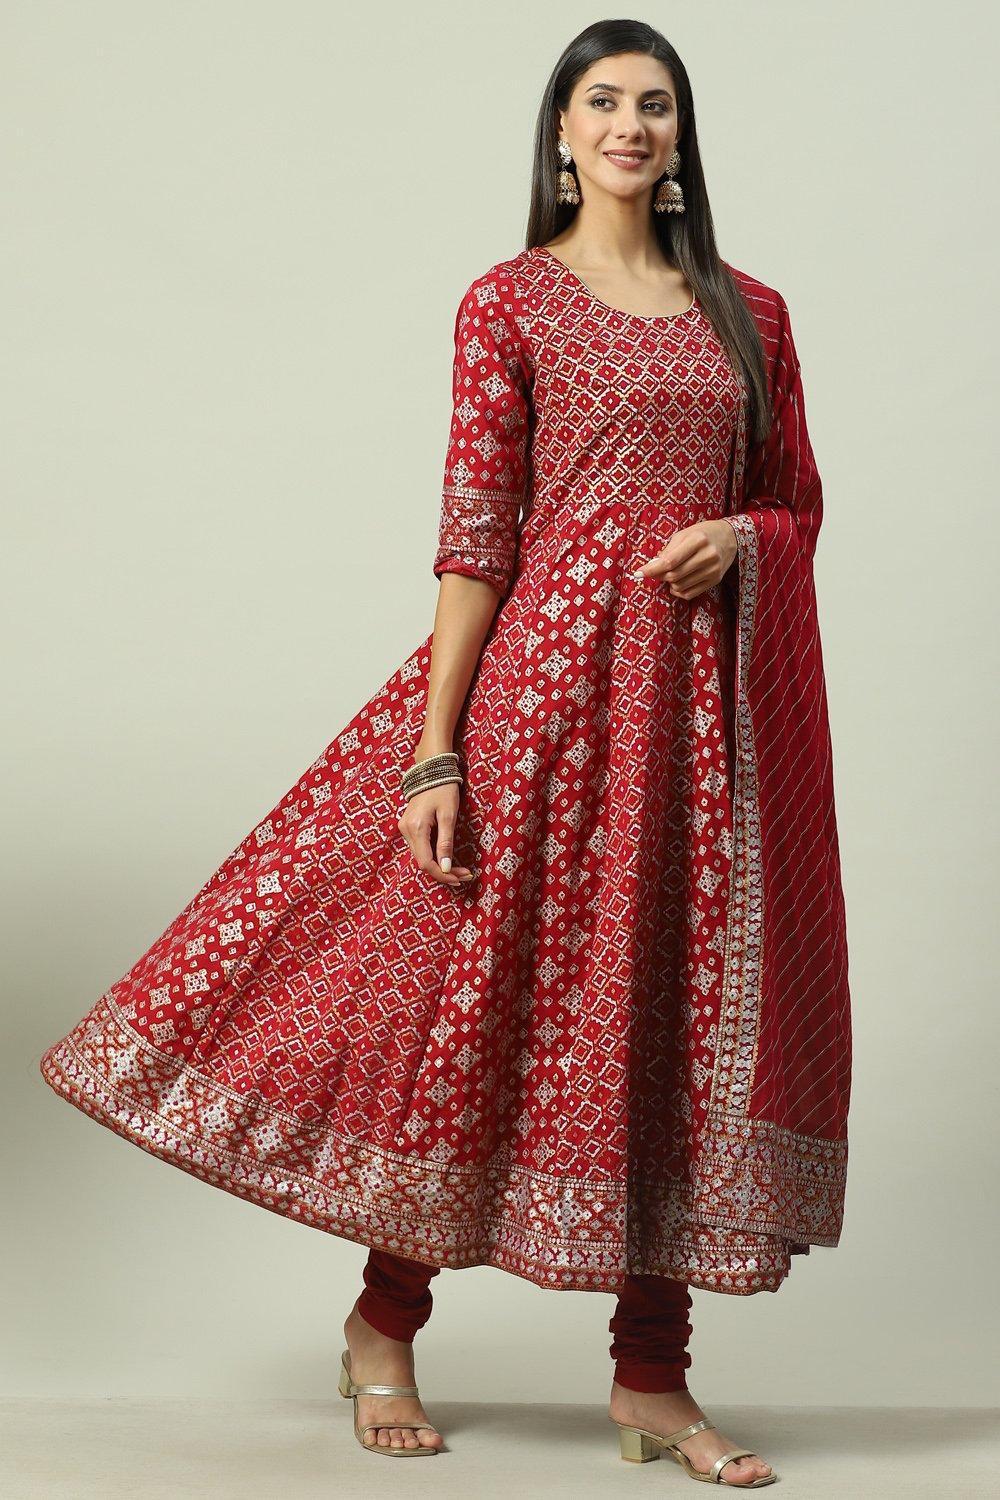 red-printed-ethnic-round-neck-3/4th-sleeves-ankle-length-women-flared-fit-churidar-kurta-dupatta-set